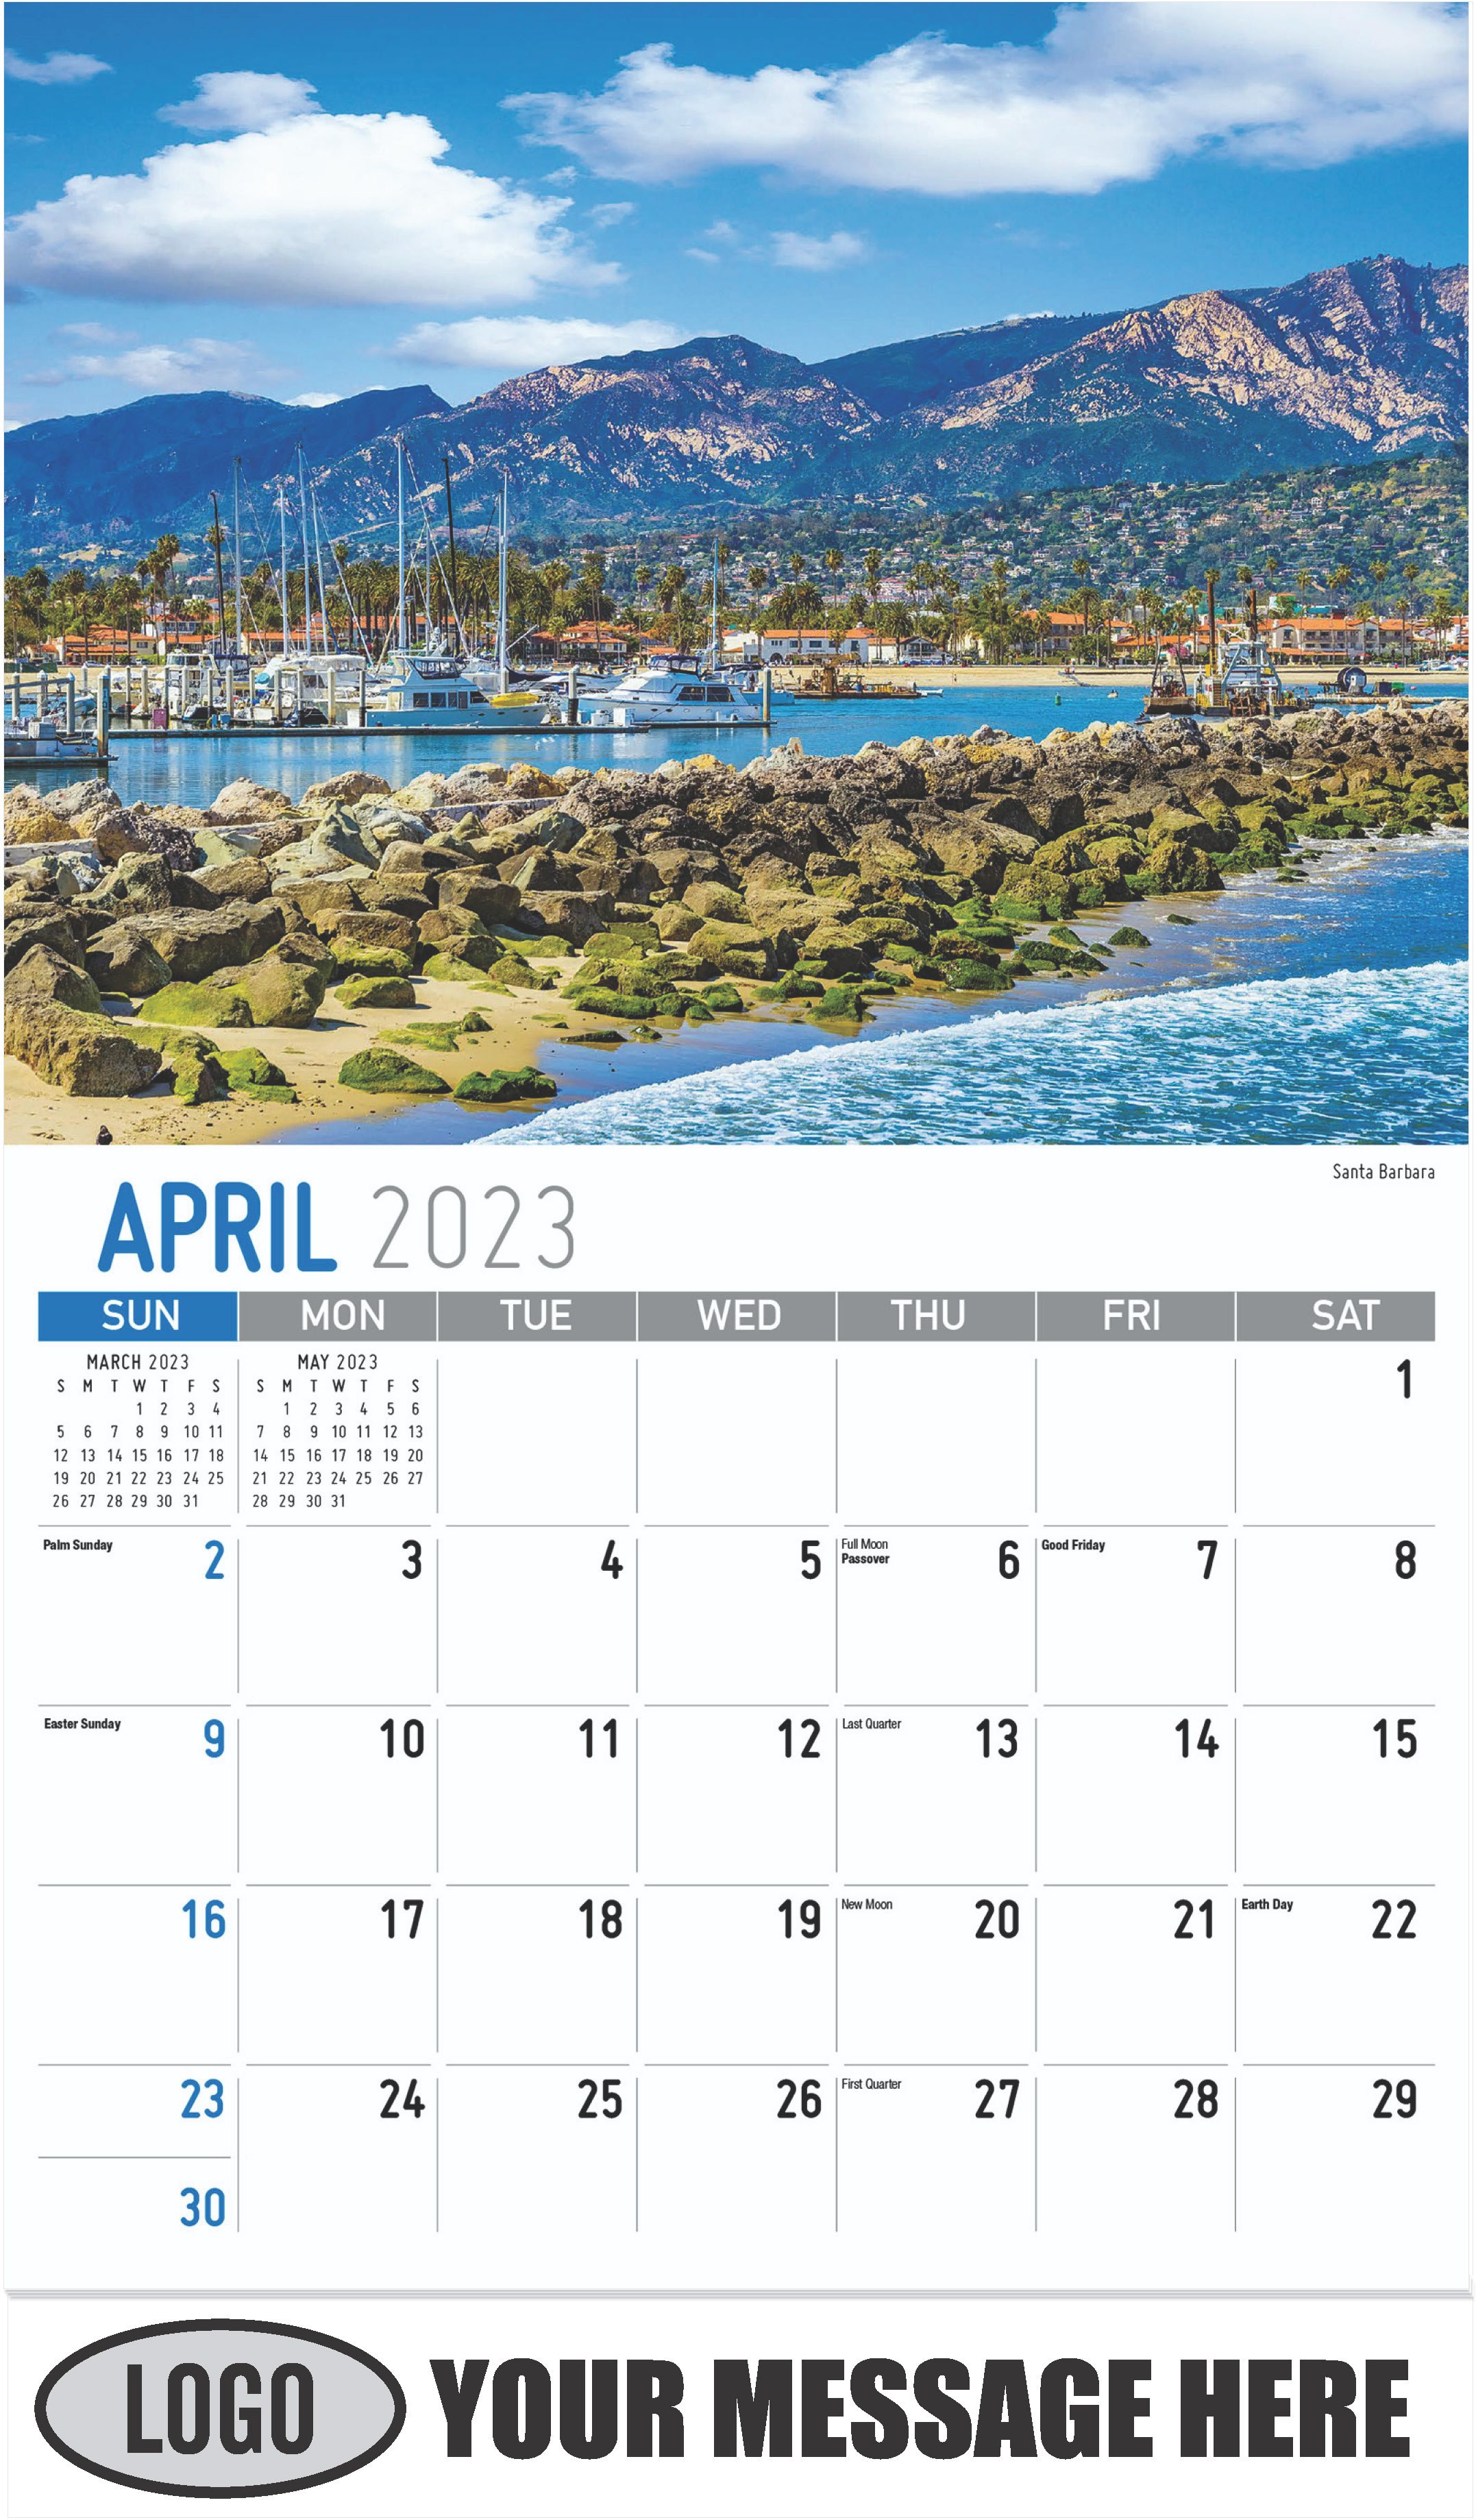 2023 Promotional Calendar | California Scenic | Low As 65¢